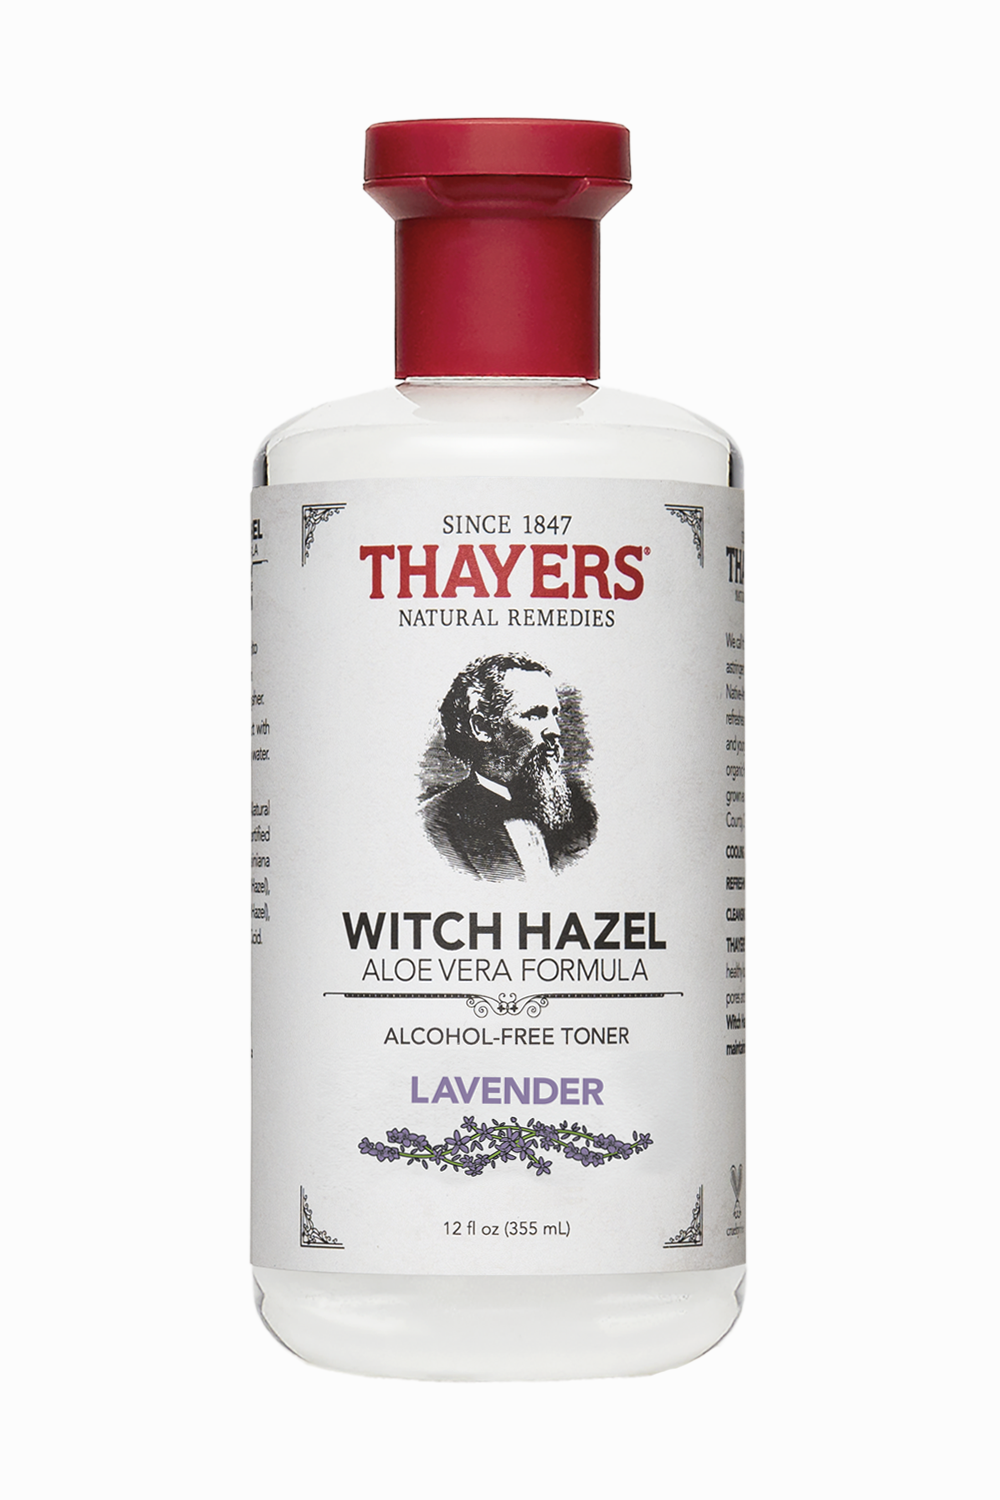 Thayers Alcohol-Free Lavender Witch Hazel Toner 355ml